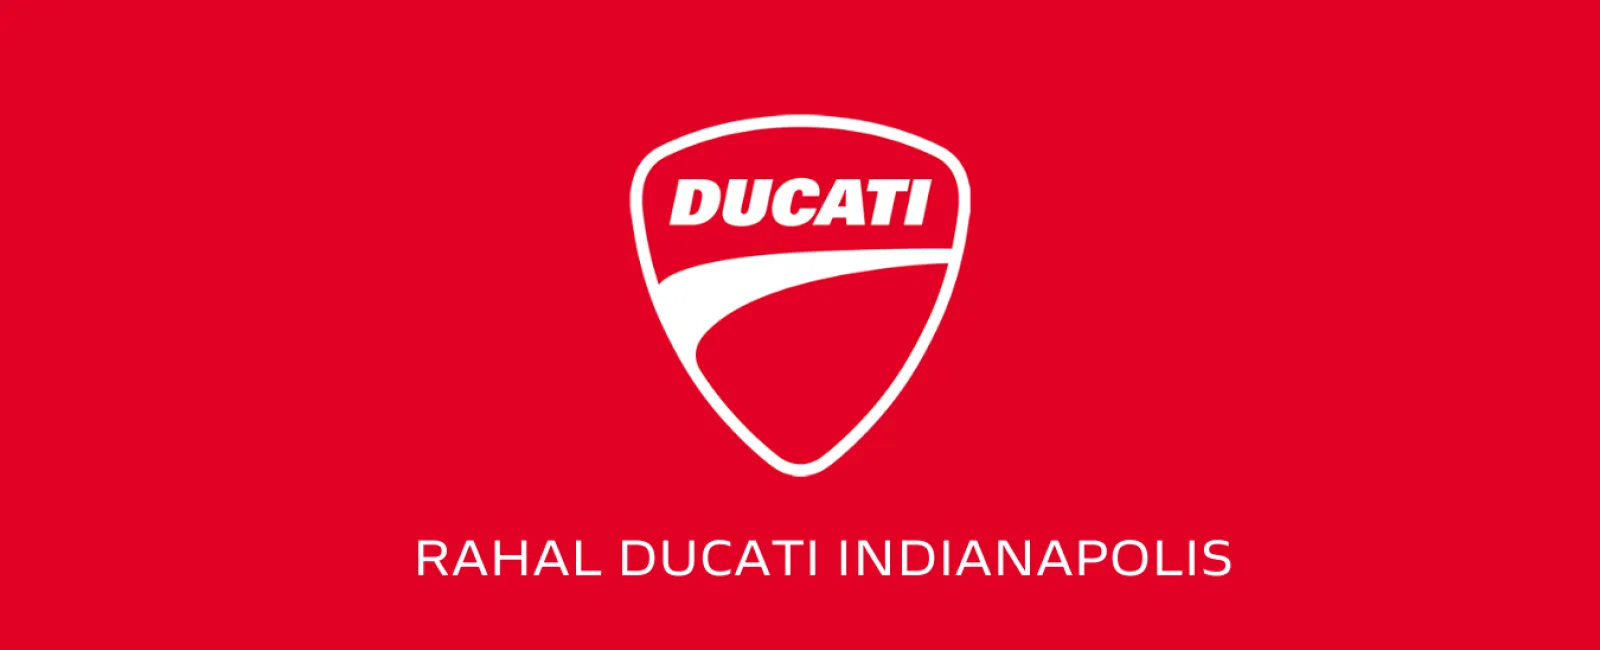 Rahal Ducati Indianapolis Opens Doors In Brownsburg, Indiana